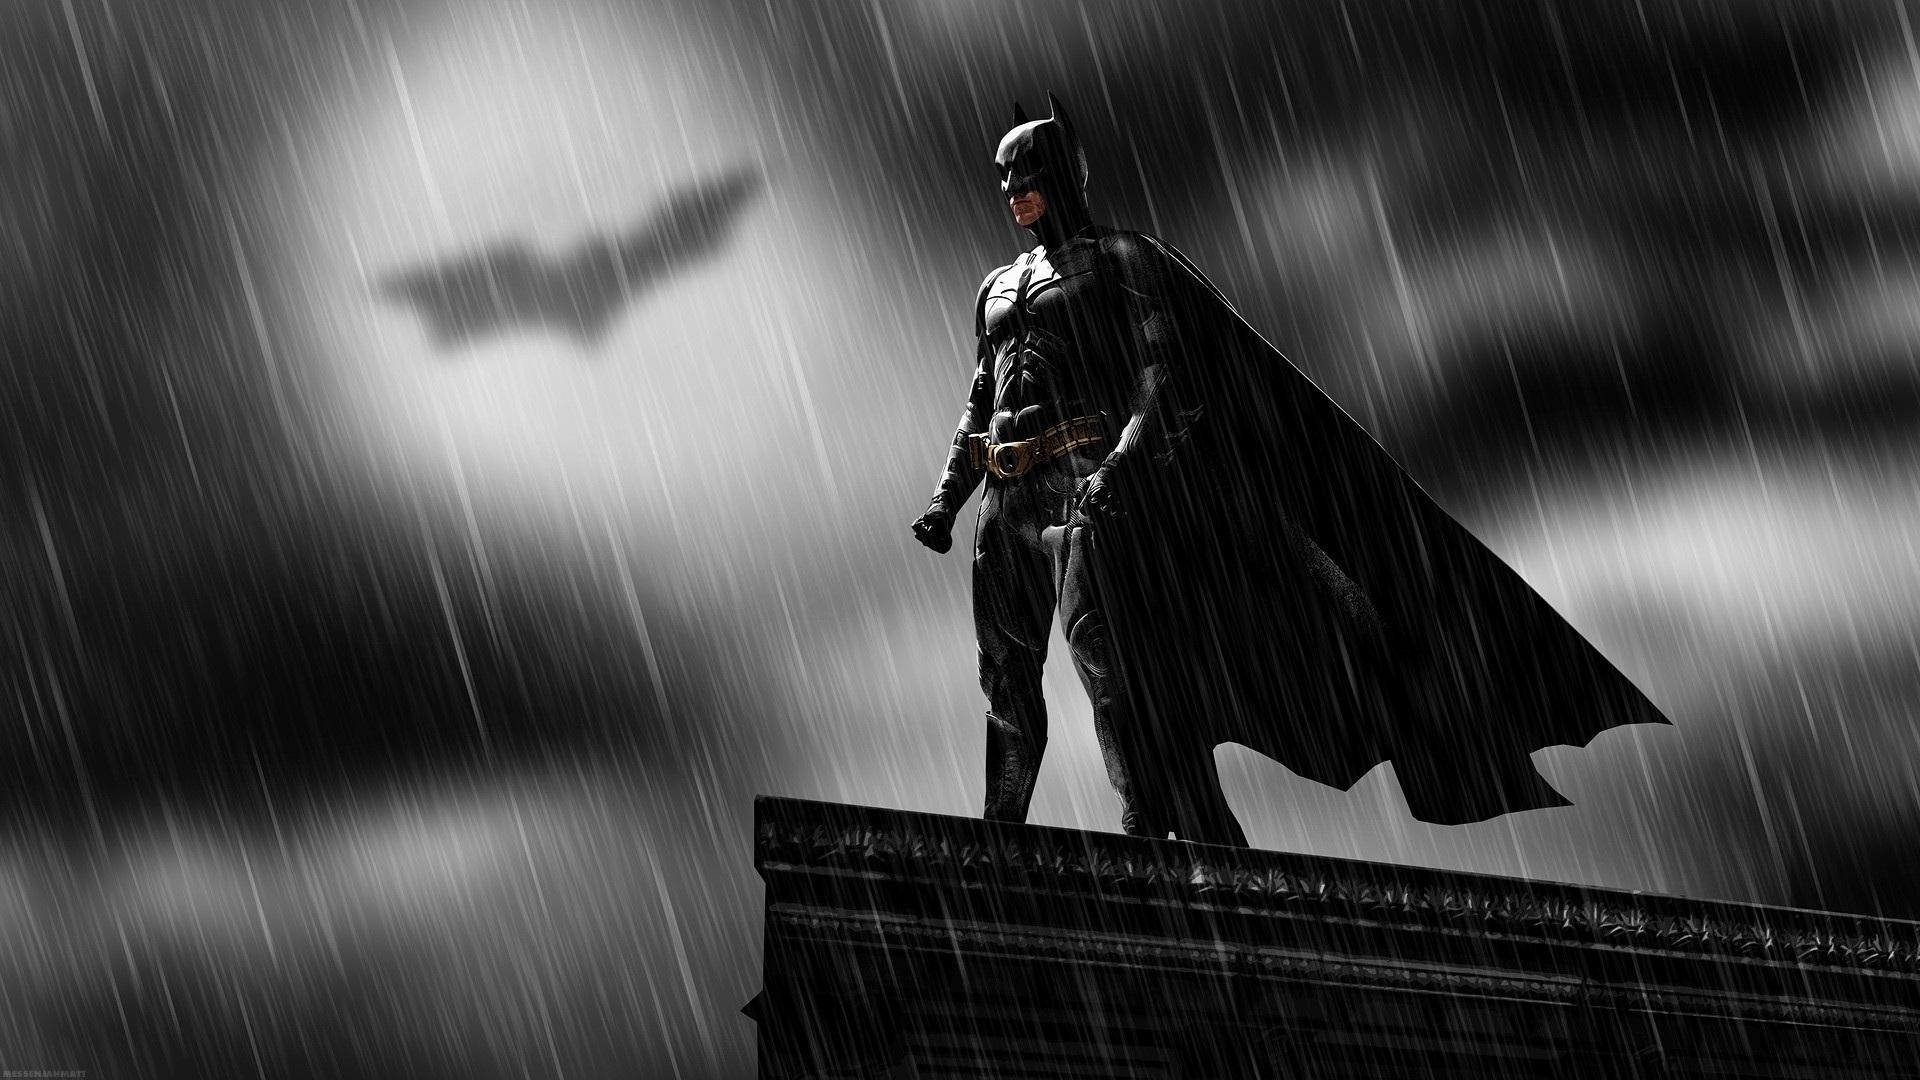 General 1920x1080 Batman rooftops rain Bat signal MessenjahMatt movies The Dark Knight superhero Christian Bale actor DC Comics Warner Brothers Christopher Nolan